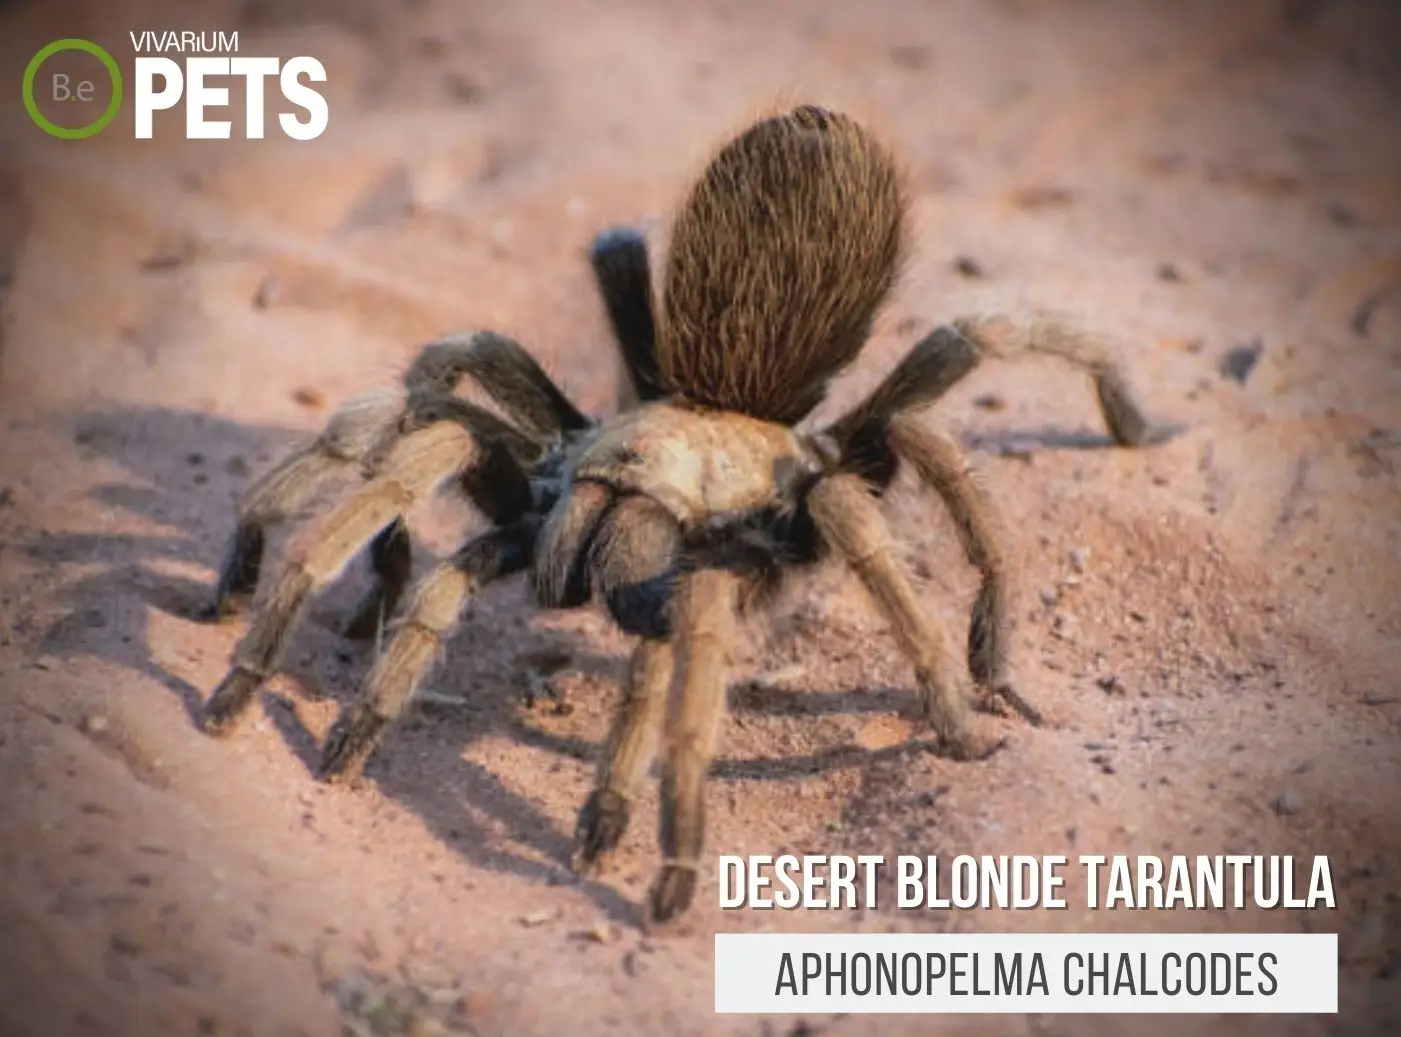 Szybkie fakty na temat Arizona Blonde Desert Tarantula